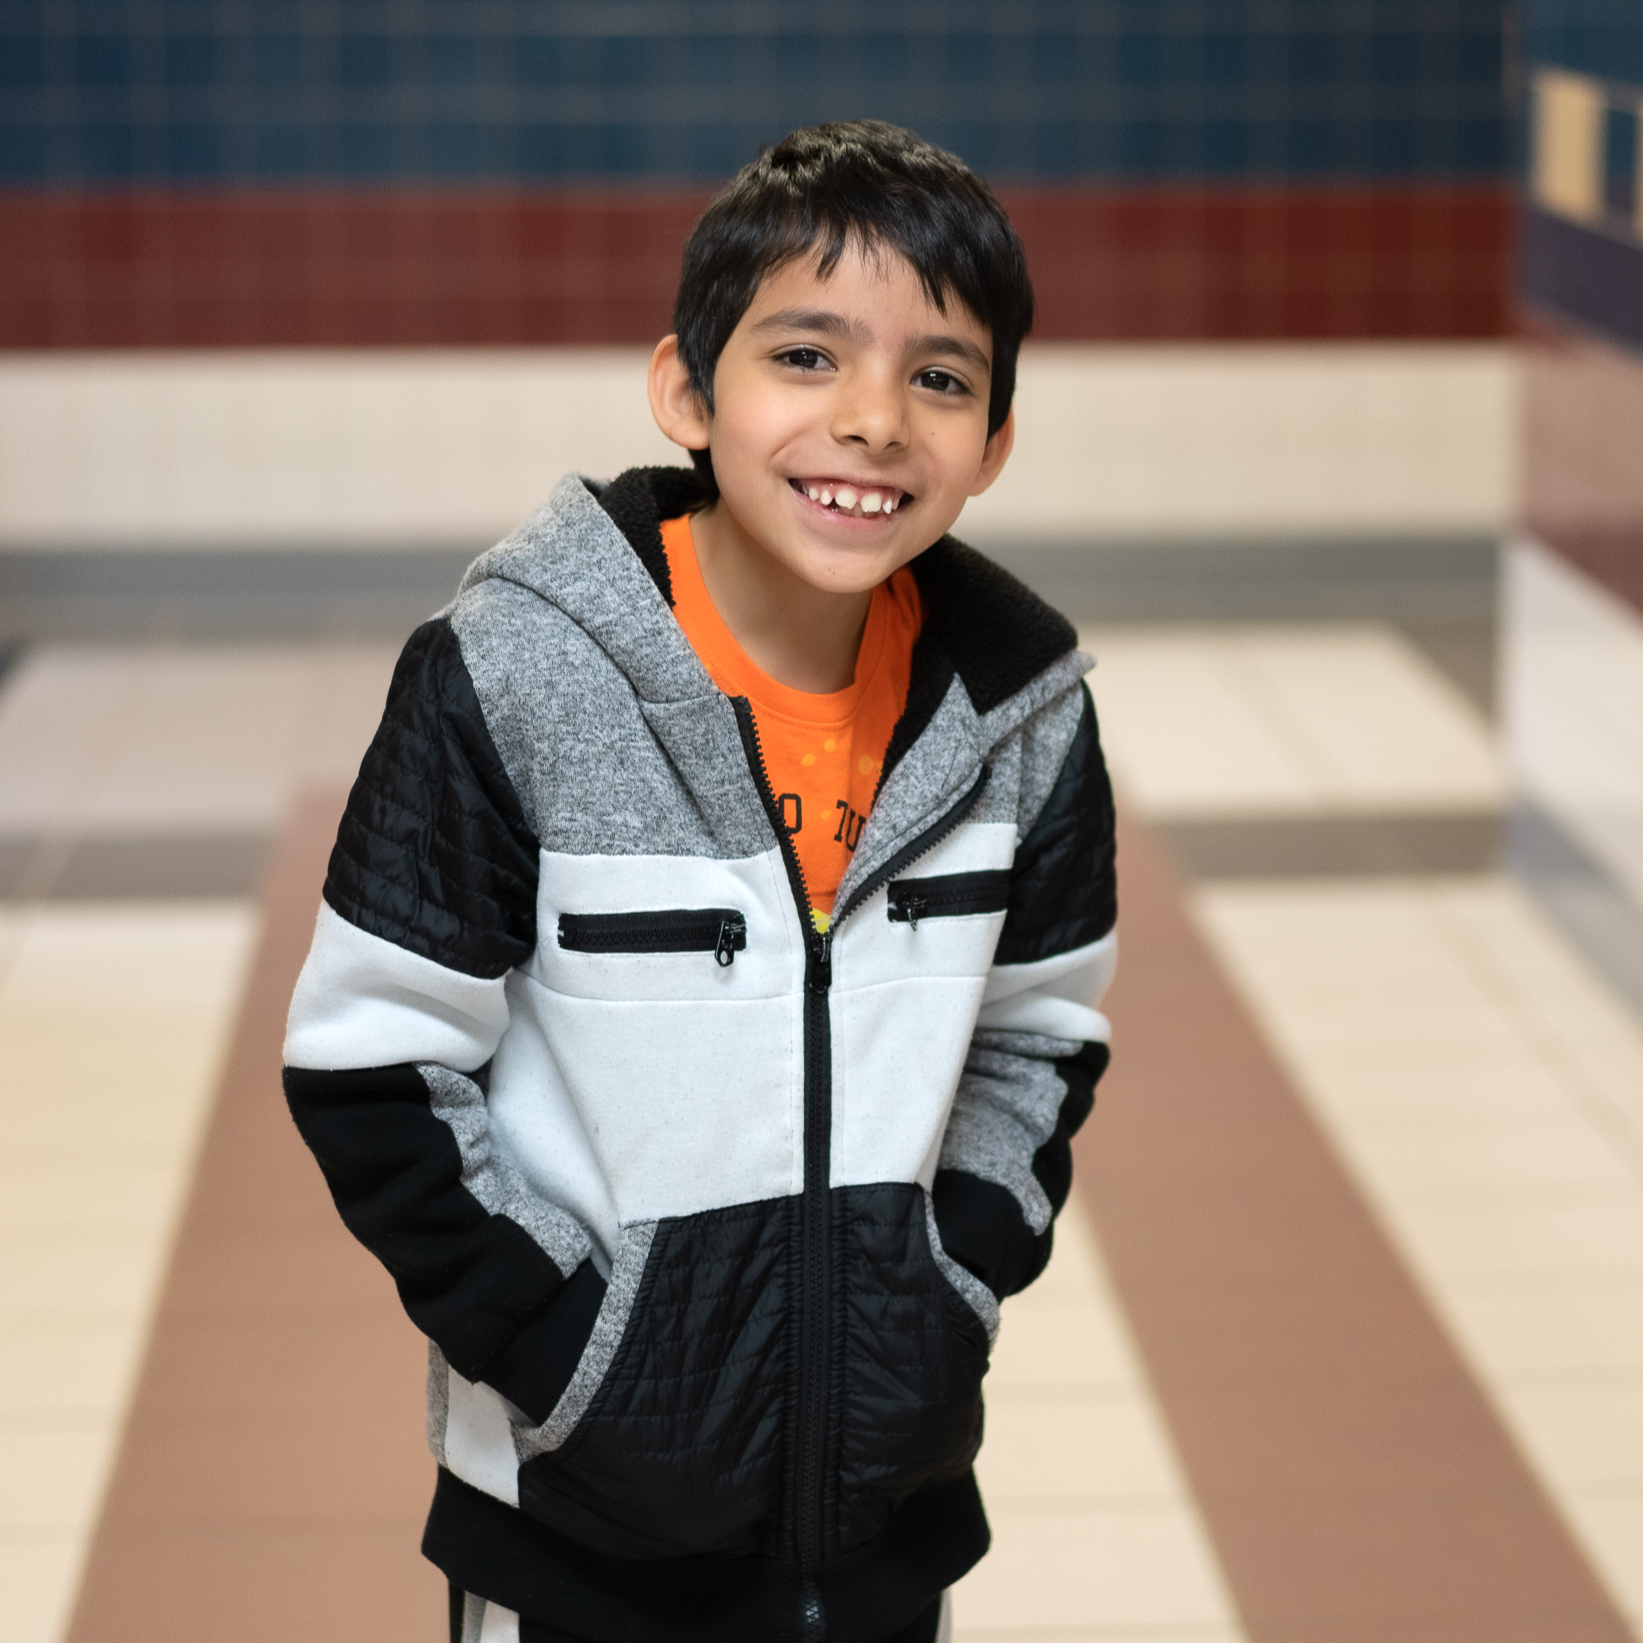 elementary age Hispanic boy wearing a black, white and gray jacket